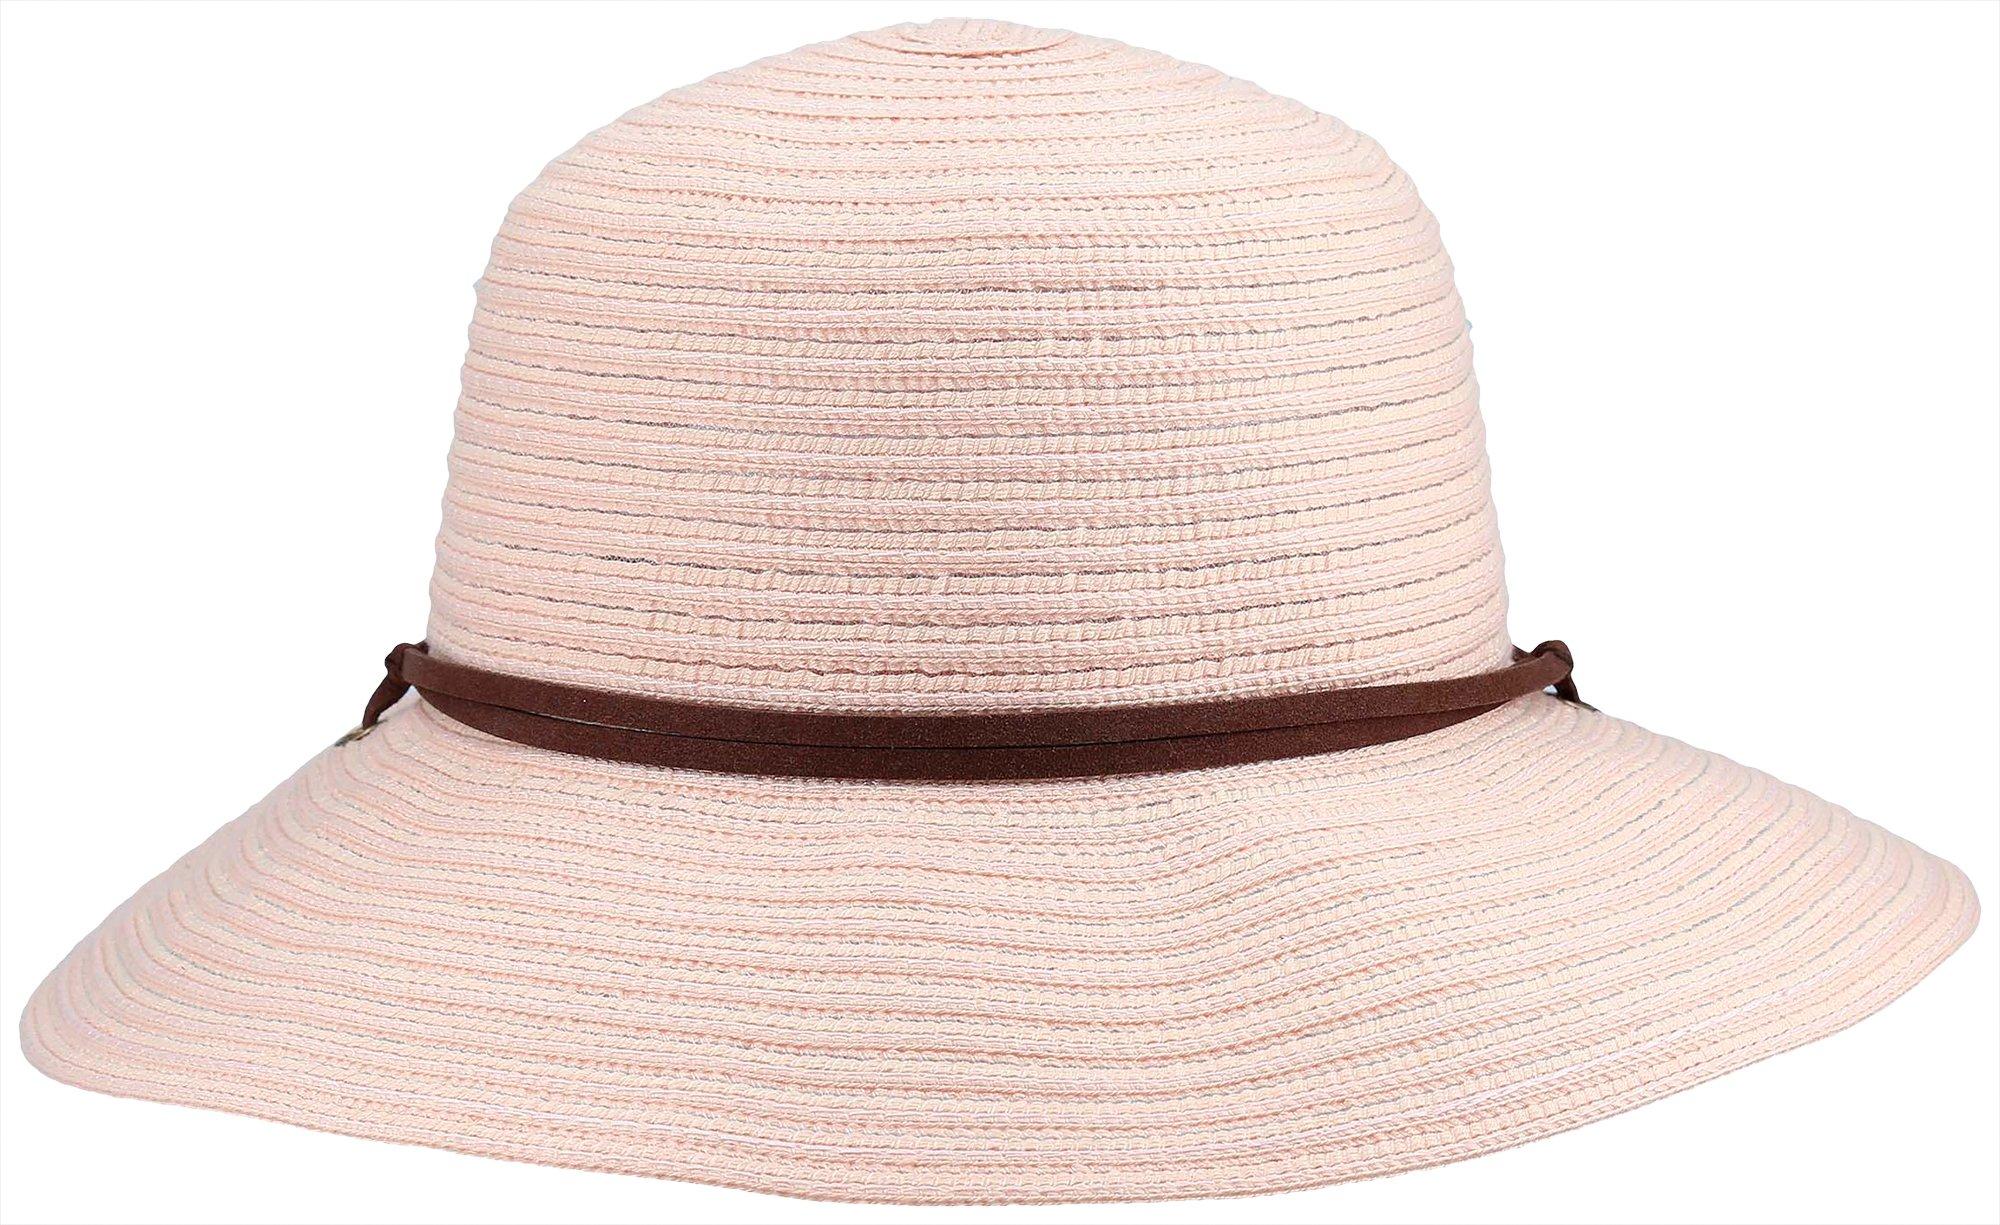 Womens Summit Breeze Crushable Straw Sun Hat